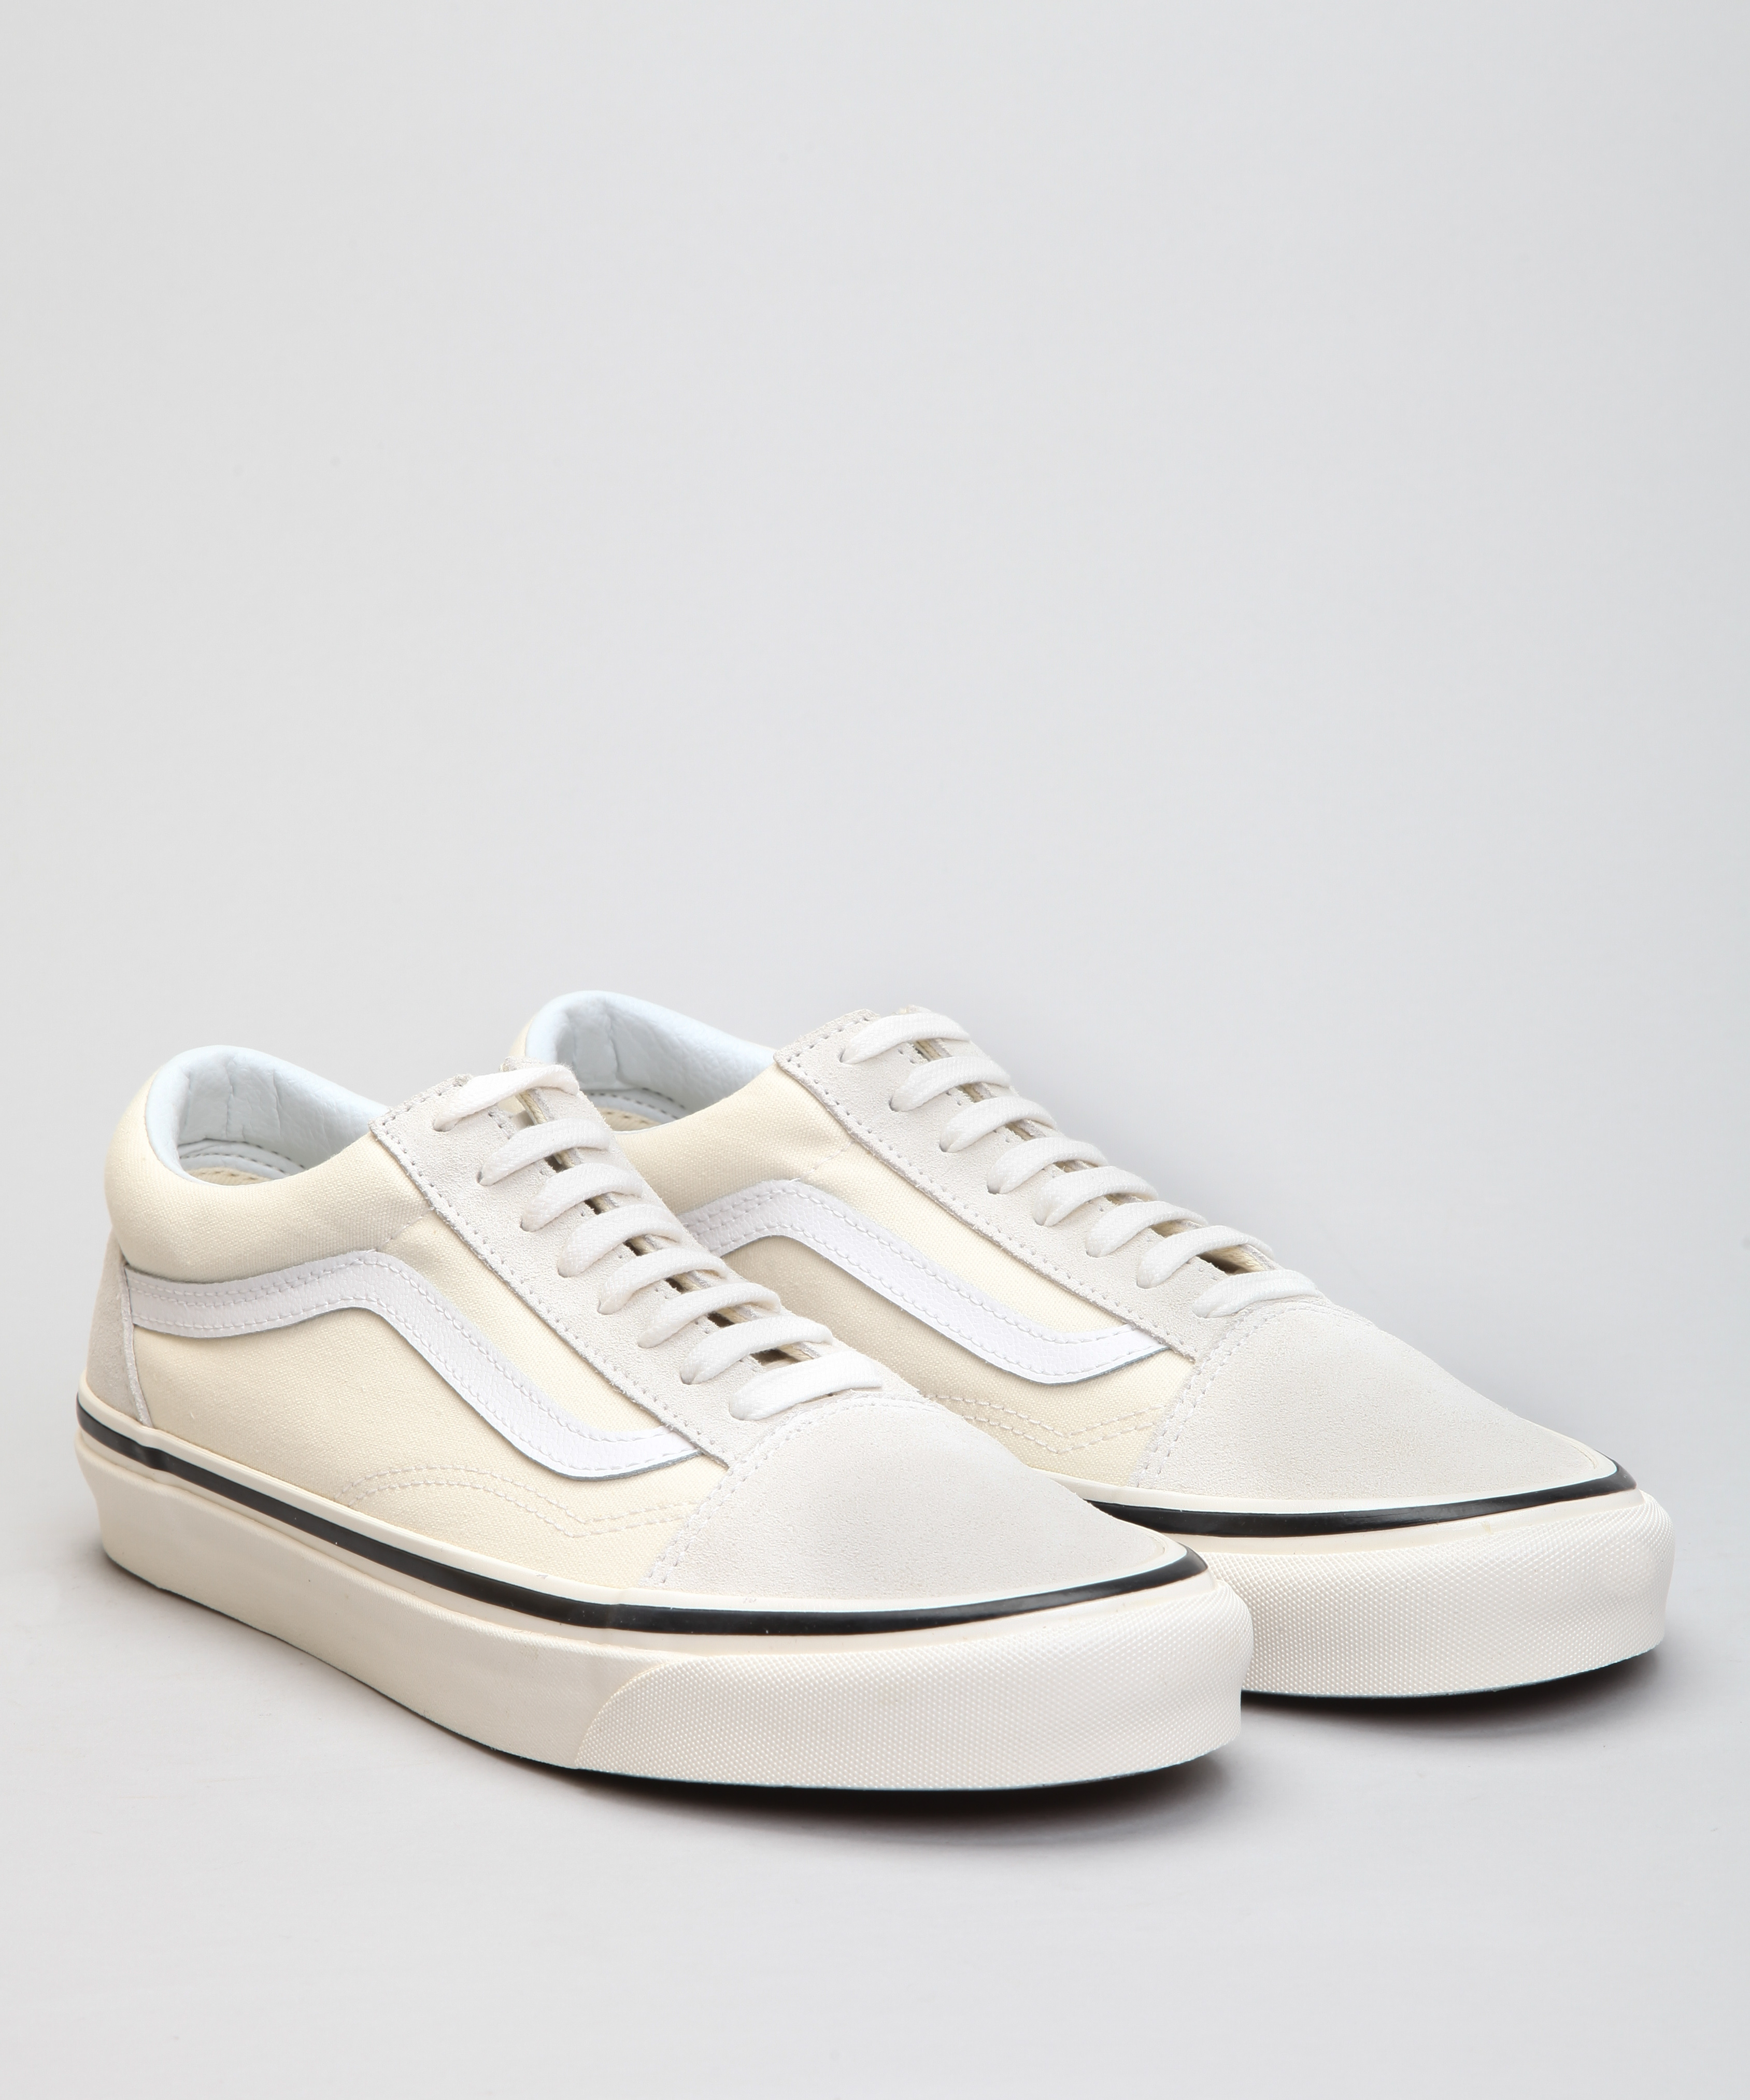 vans white shoes online